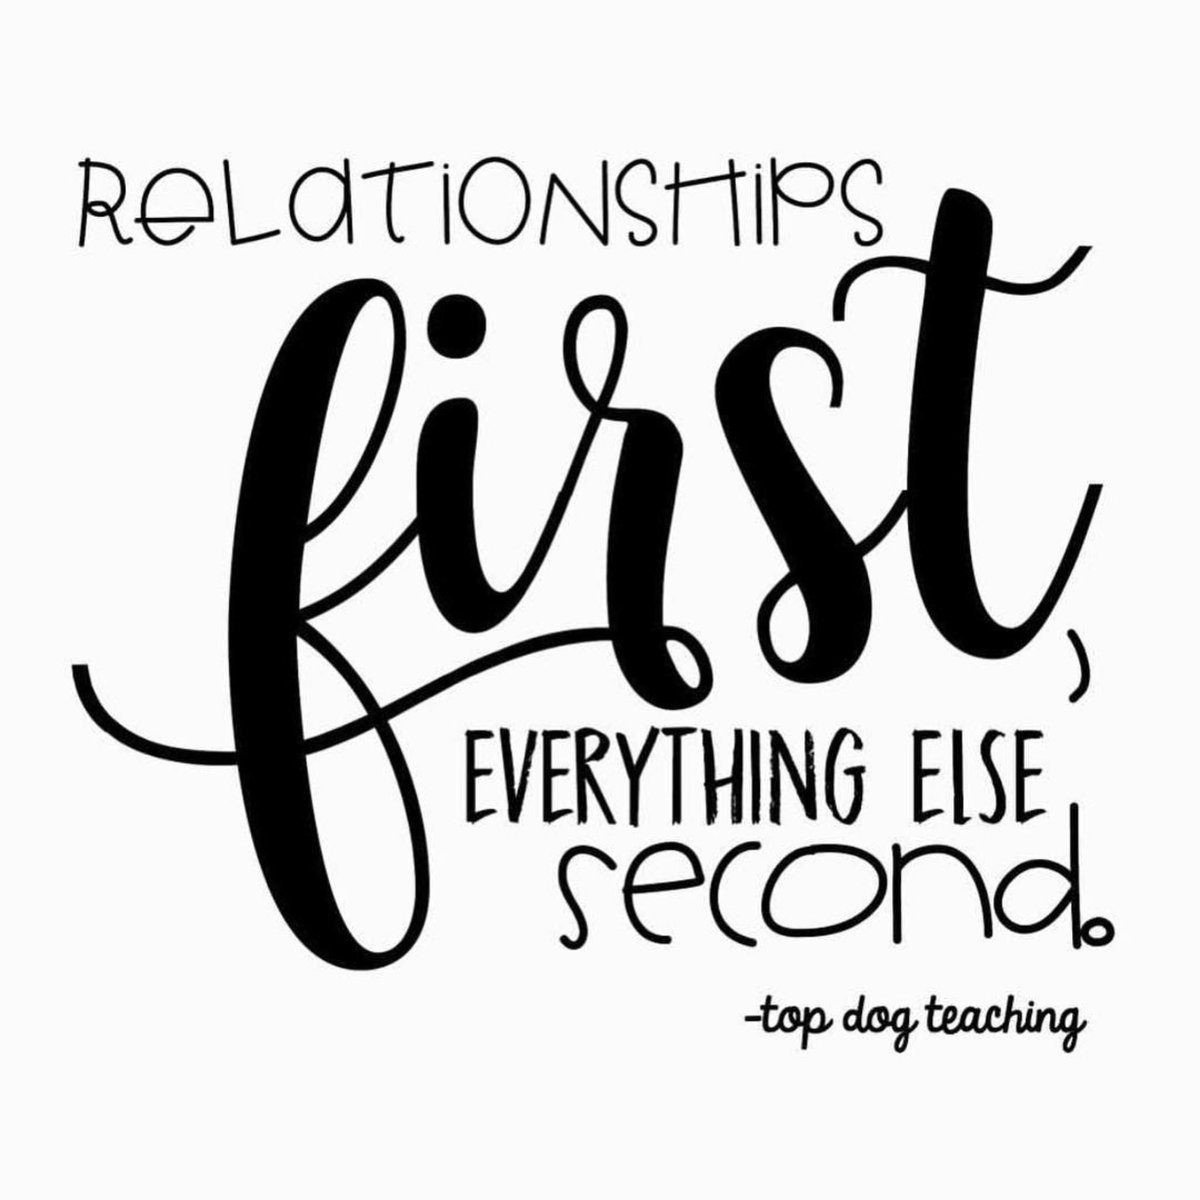 Right?
#Grateful for time spent building relationships!